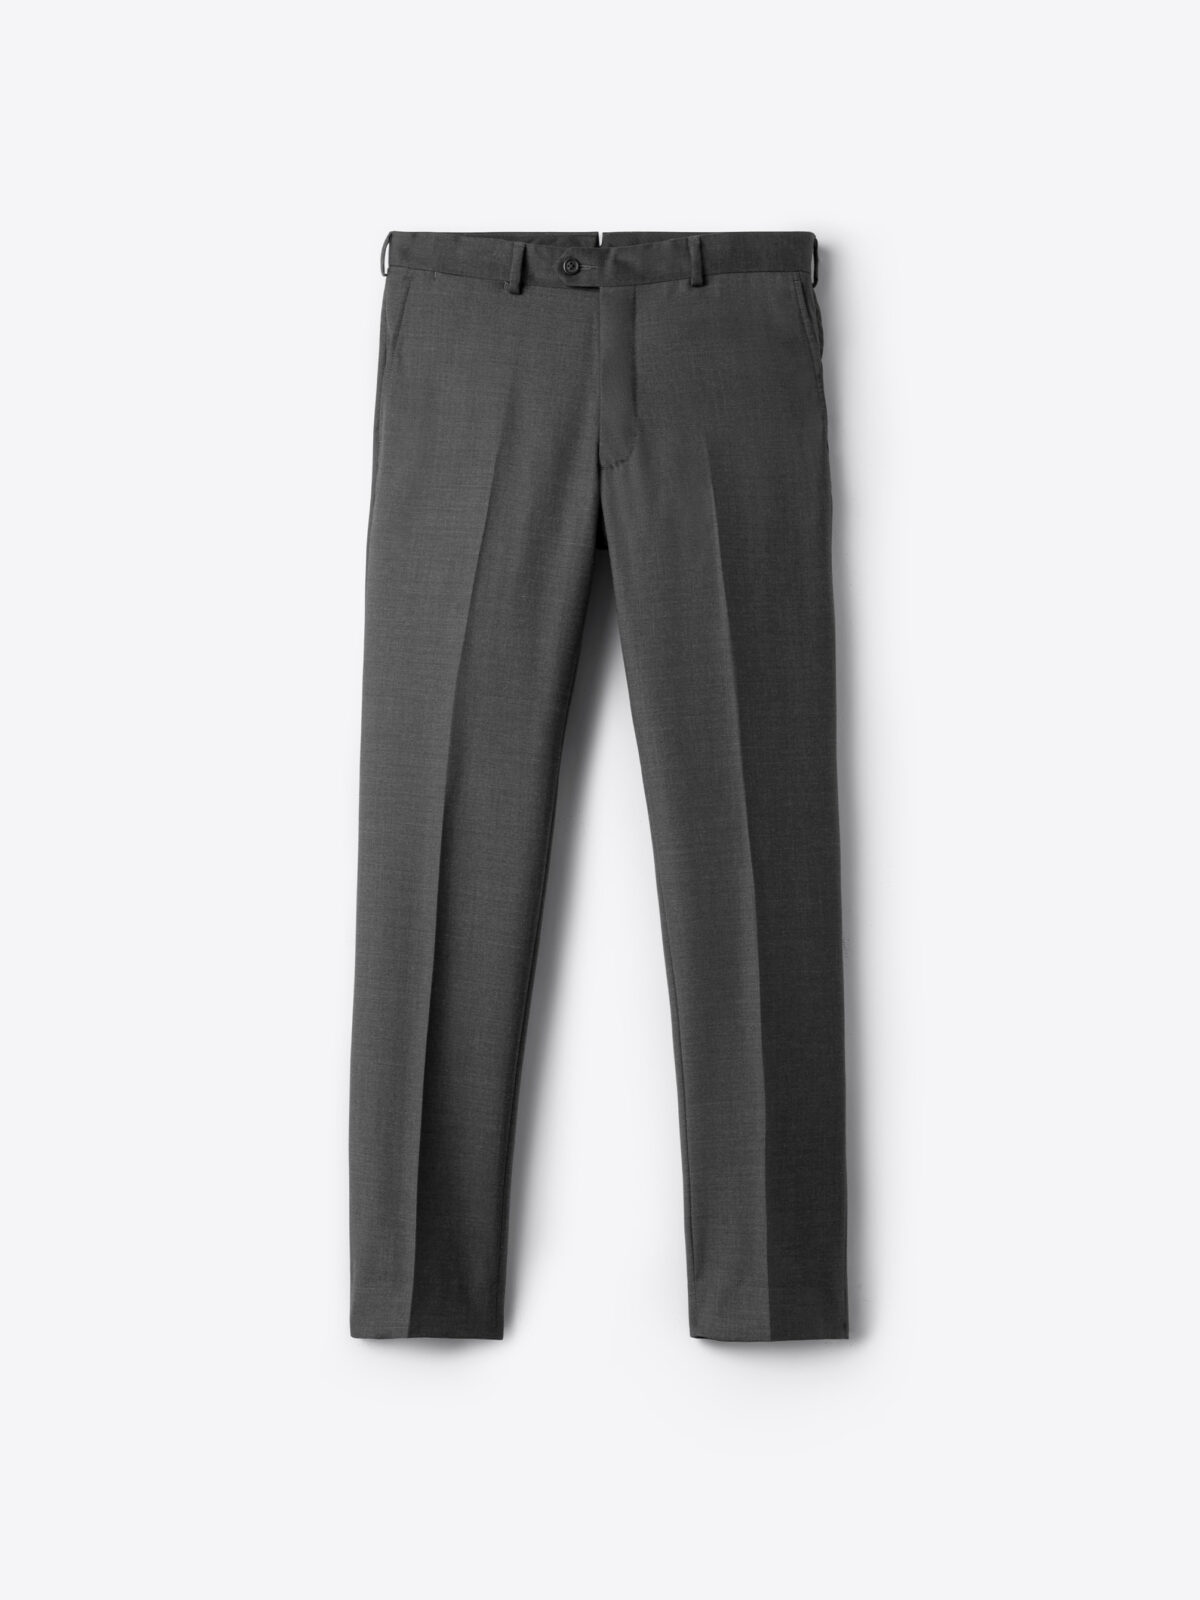 Grey Melange Dress Pant - Custom Fit Tailored Clothing